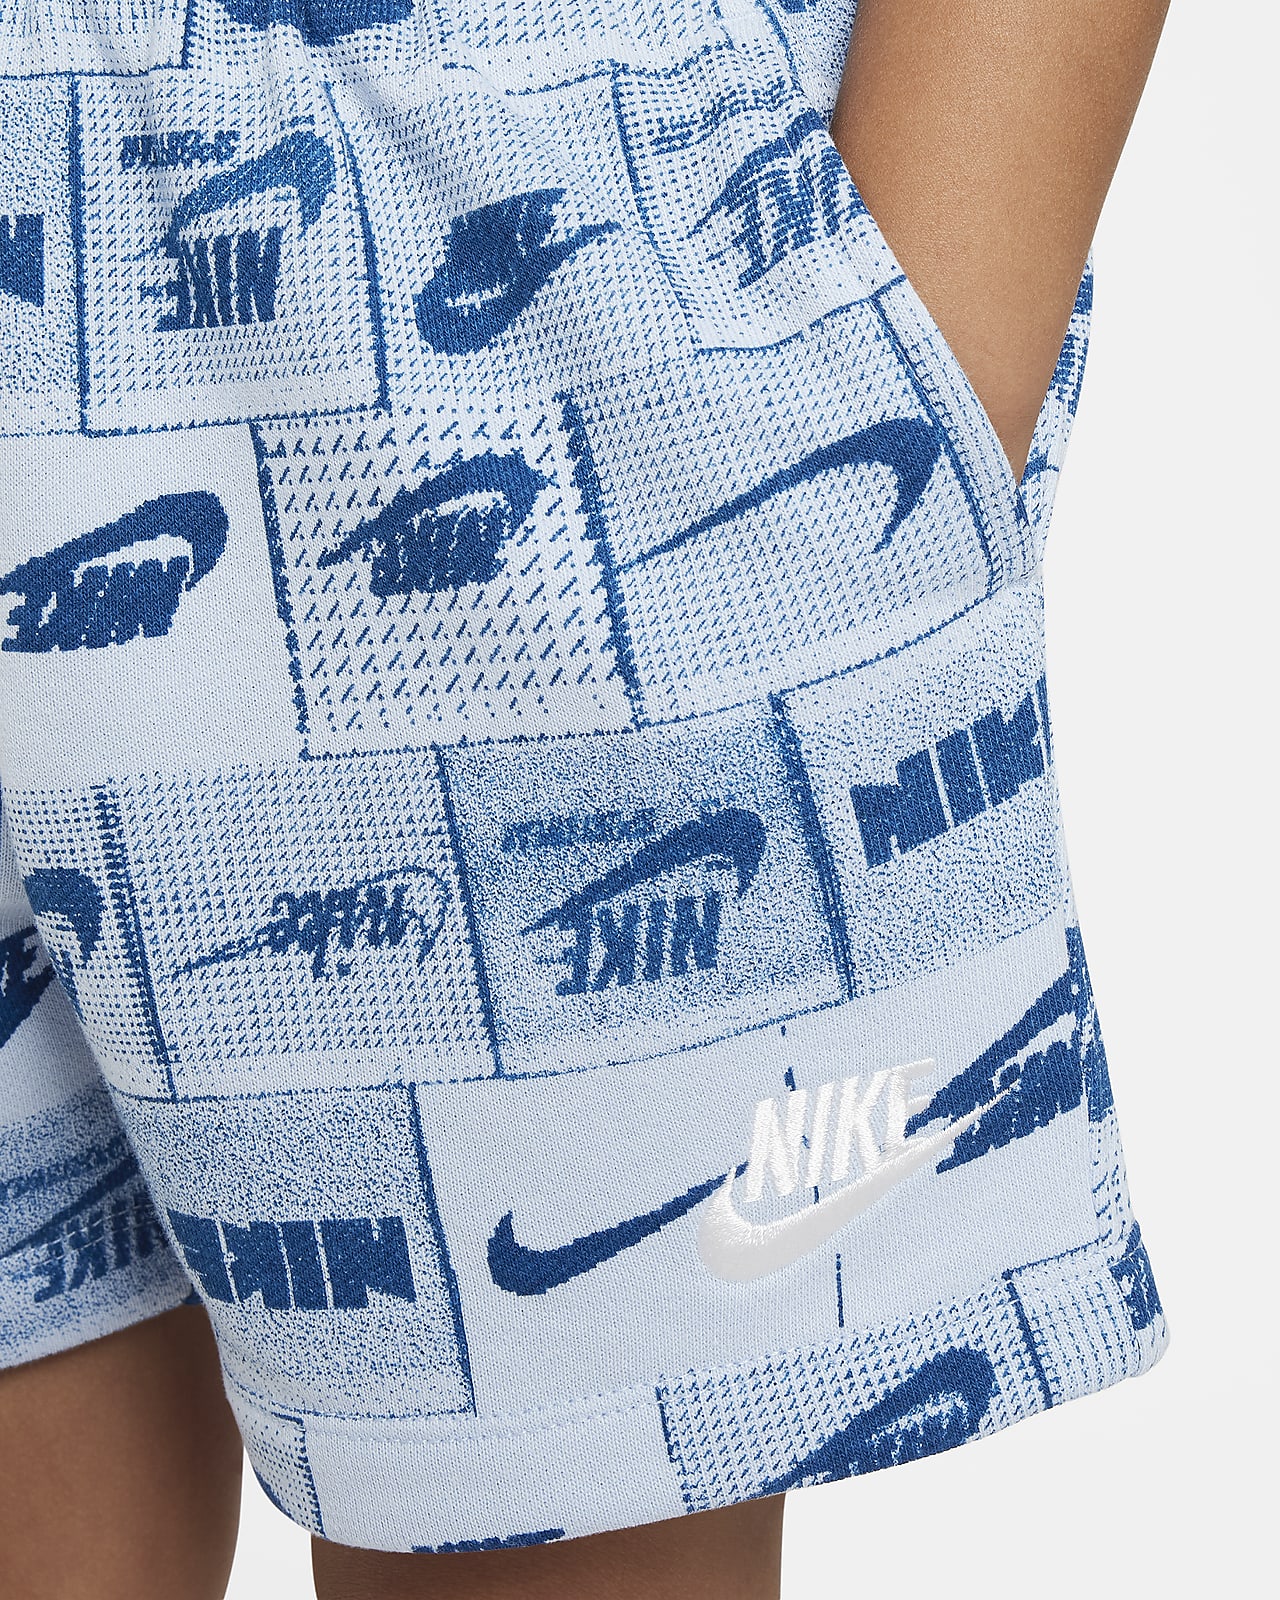 Nike Sportswear Club Toddler Printed Shorts